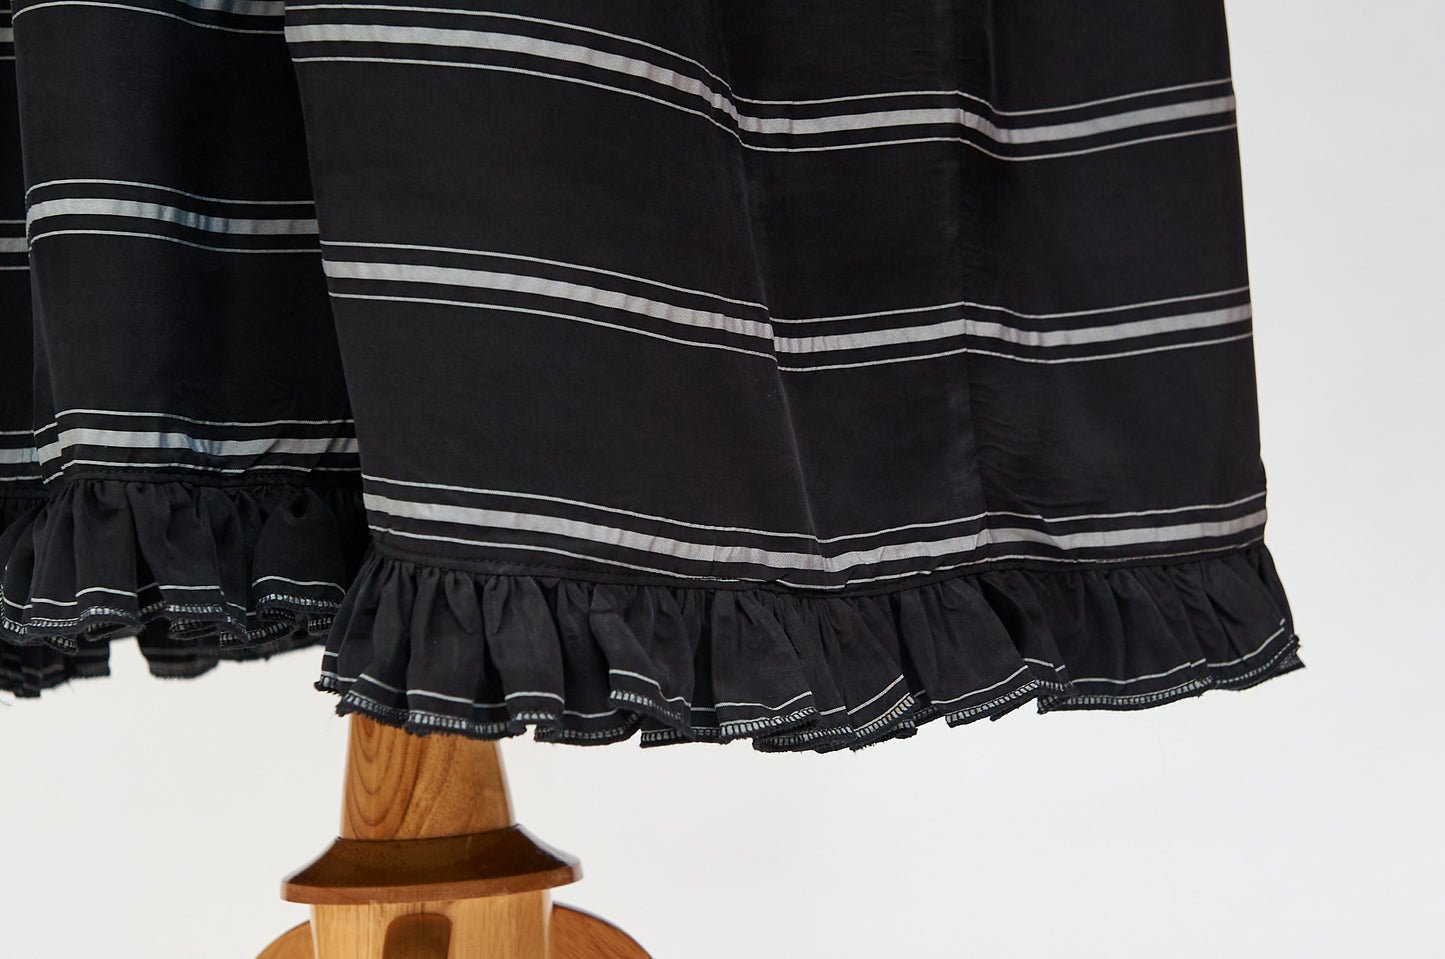 Nicola Dress : Black & white skirt